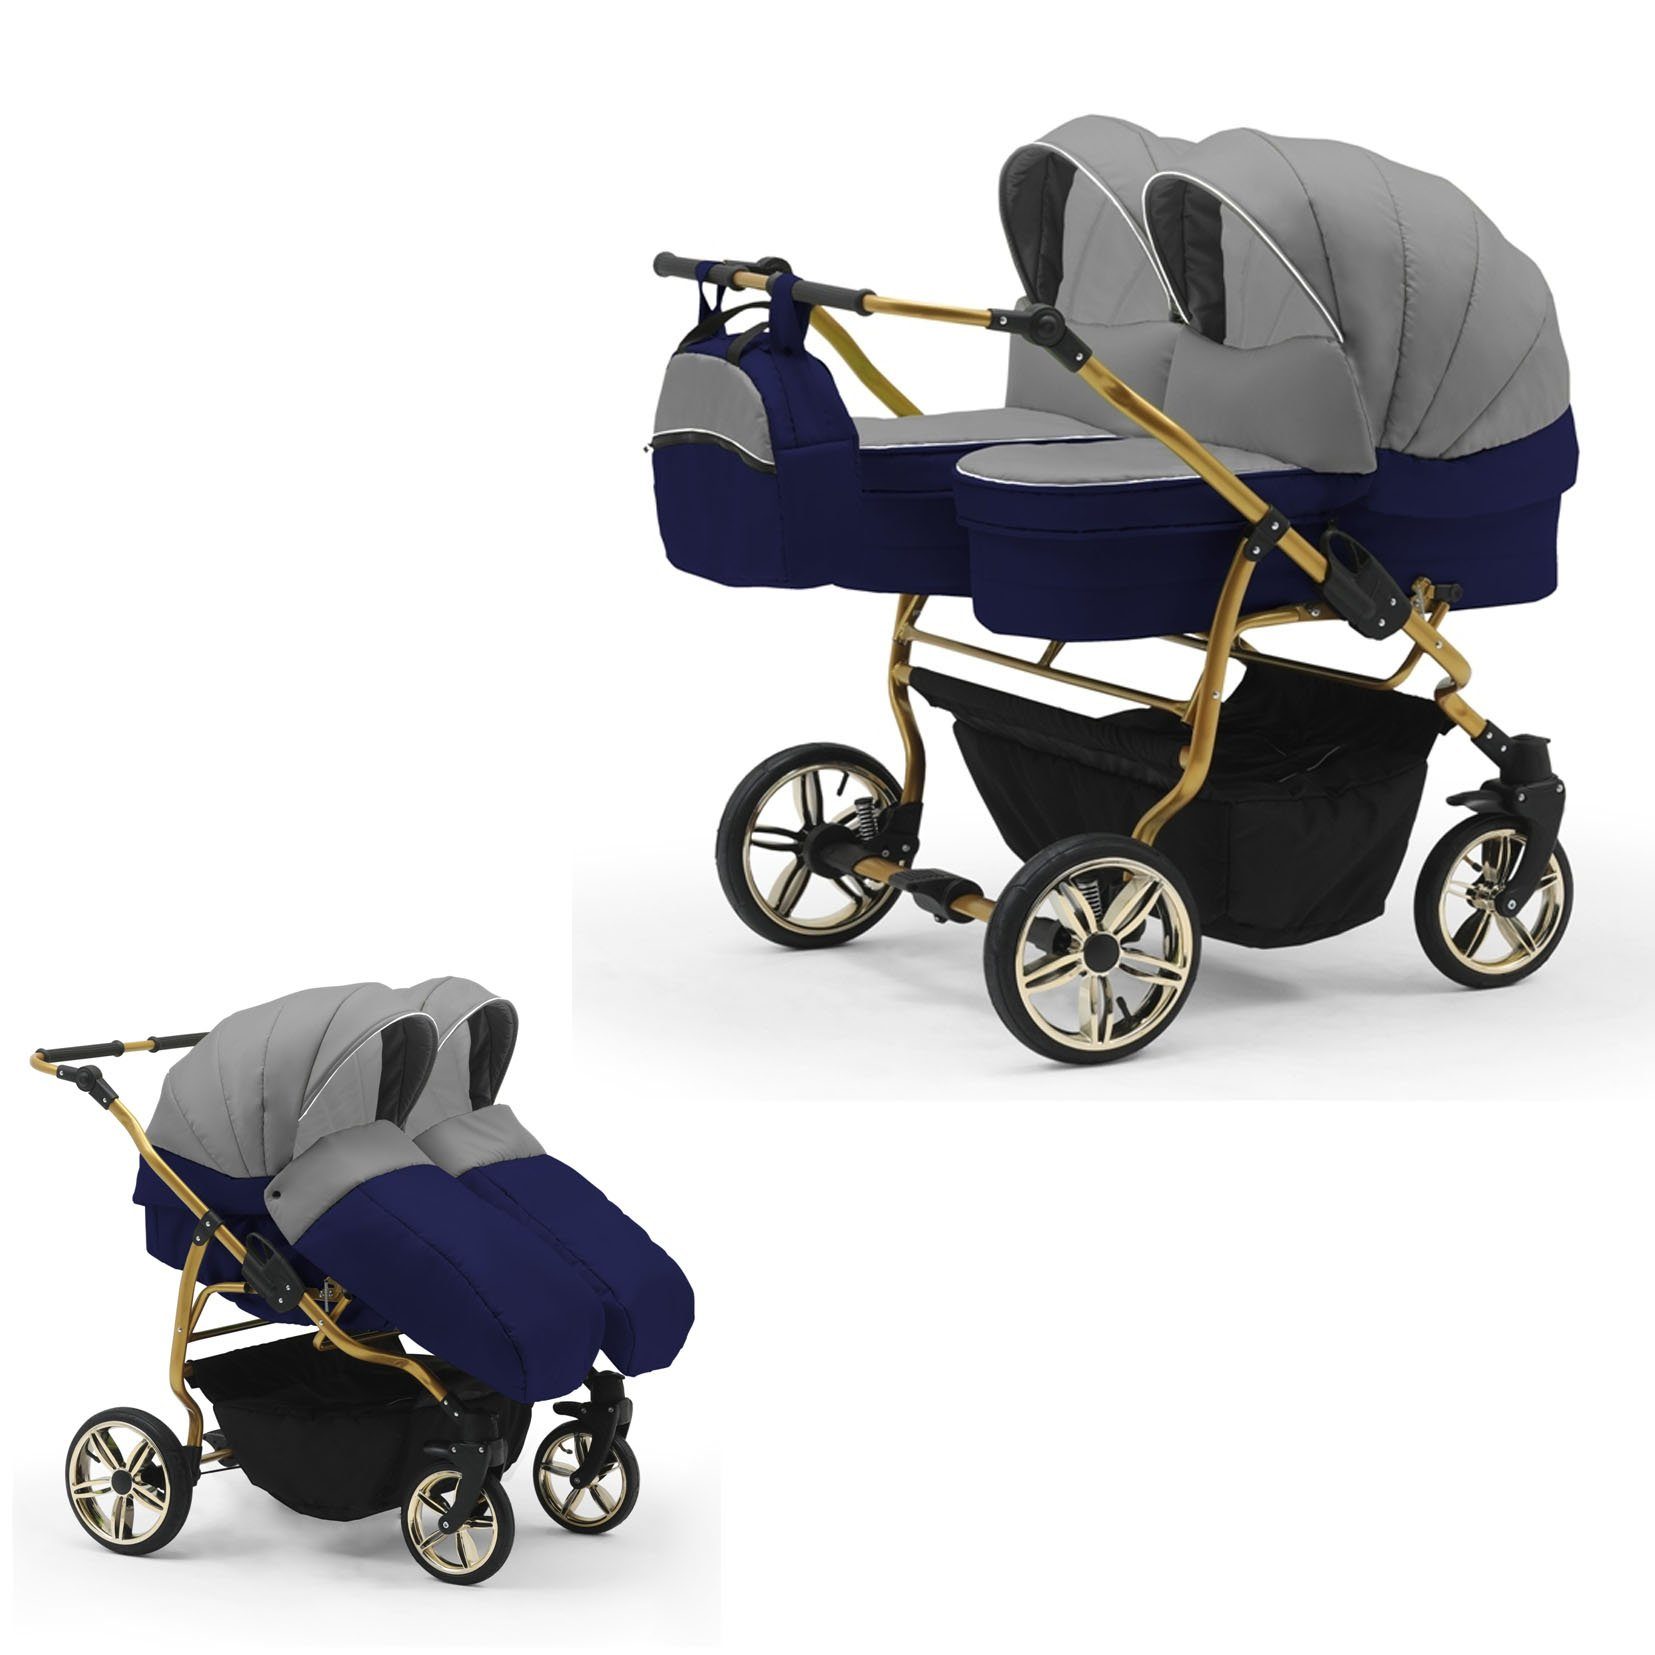 33 1 - Farben Zwillingswagen in babies-on-wheels Lux Teile Grau-Navy 10 Duet Zwillingskinderwagen - 2 in